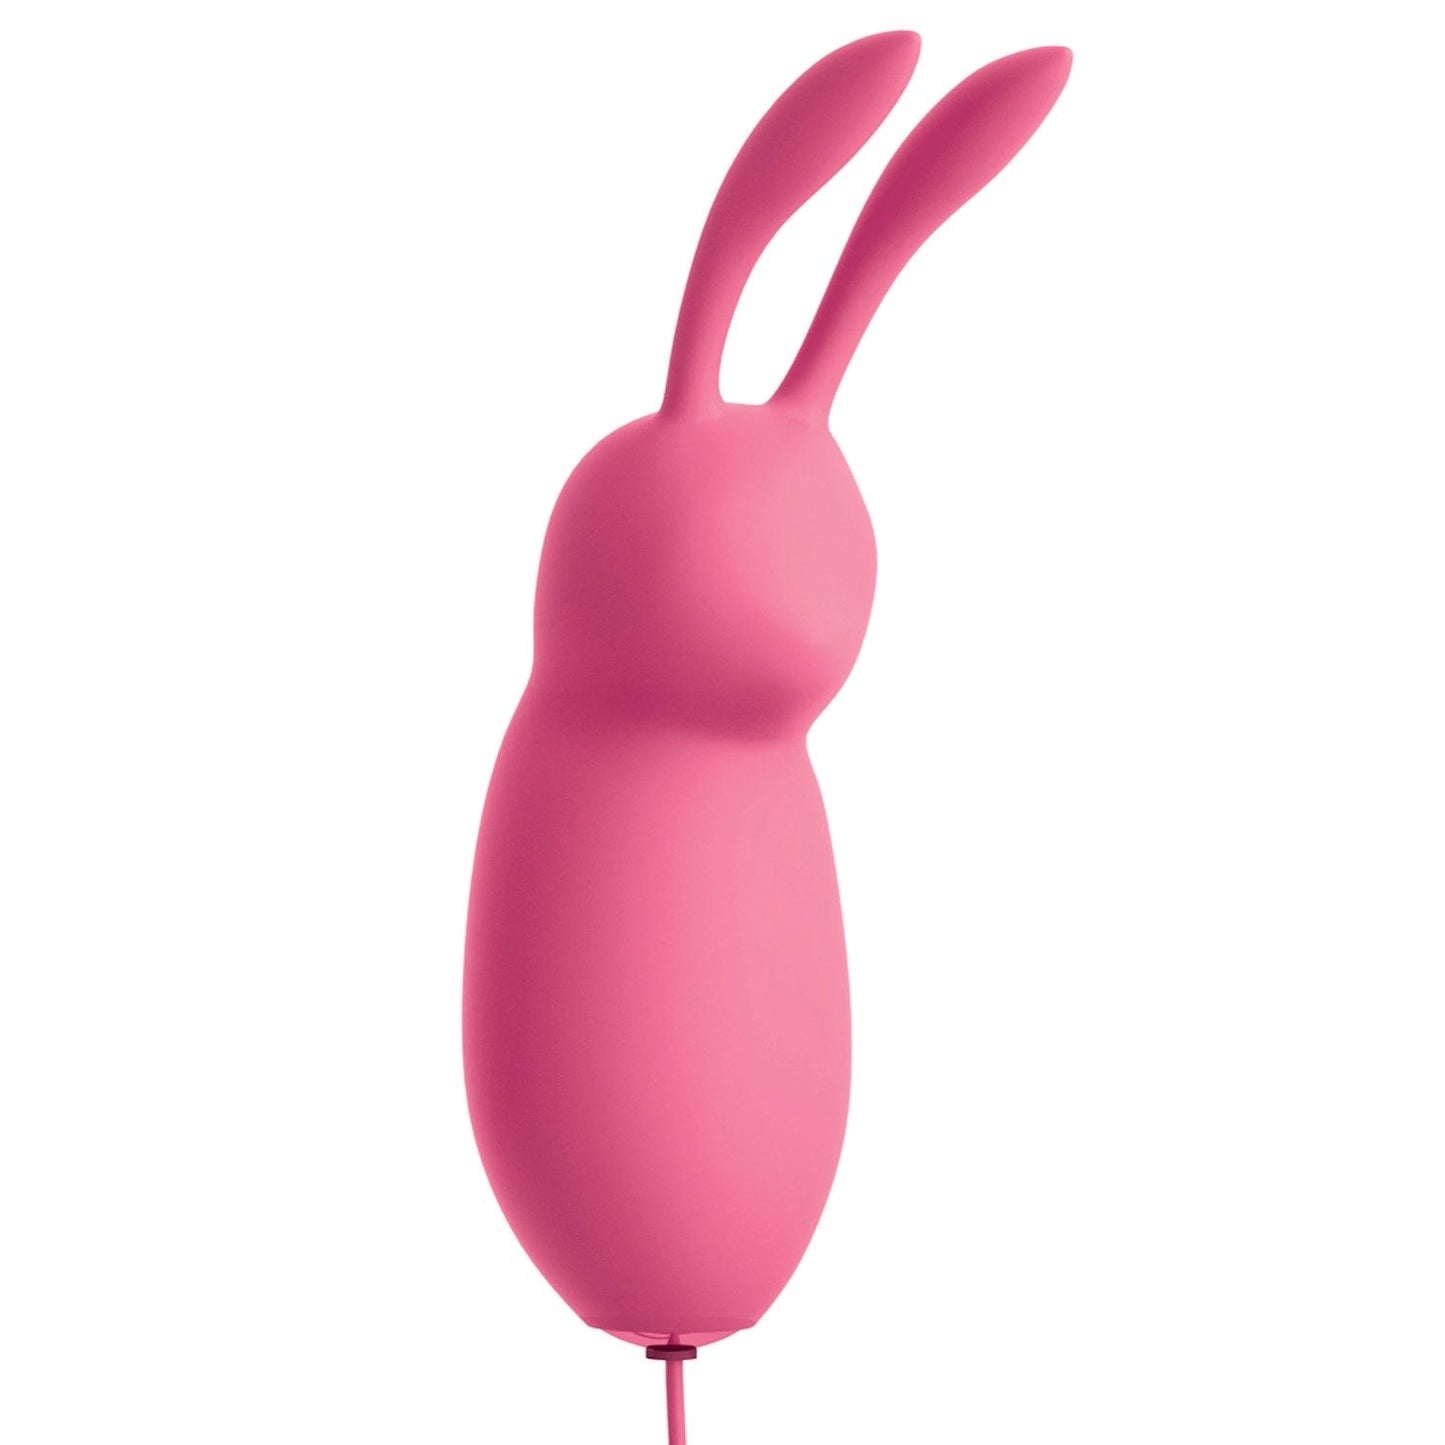 OMG! Bullets #Cute - Pink USB Powered Rabbit Bullet